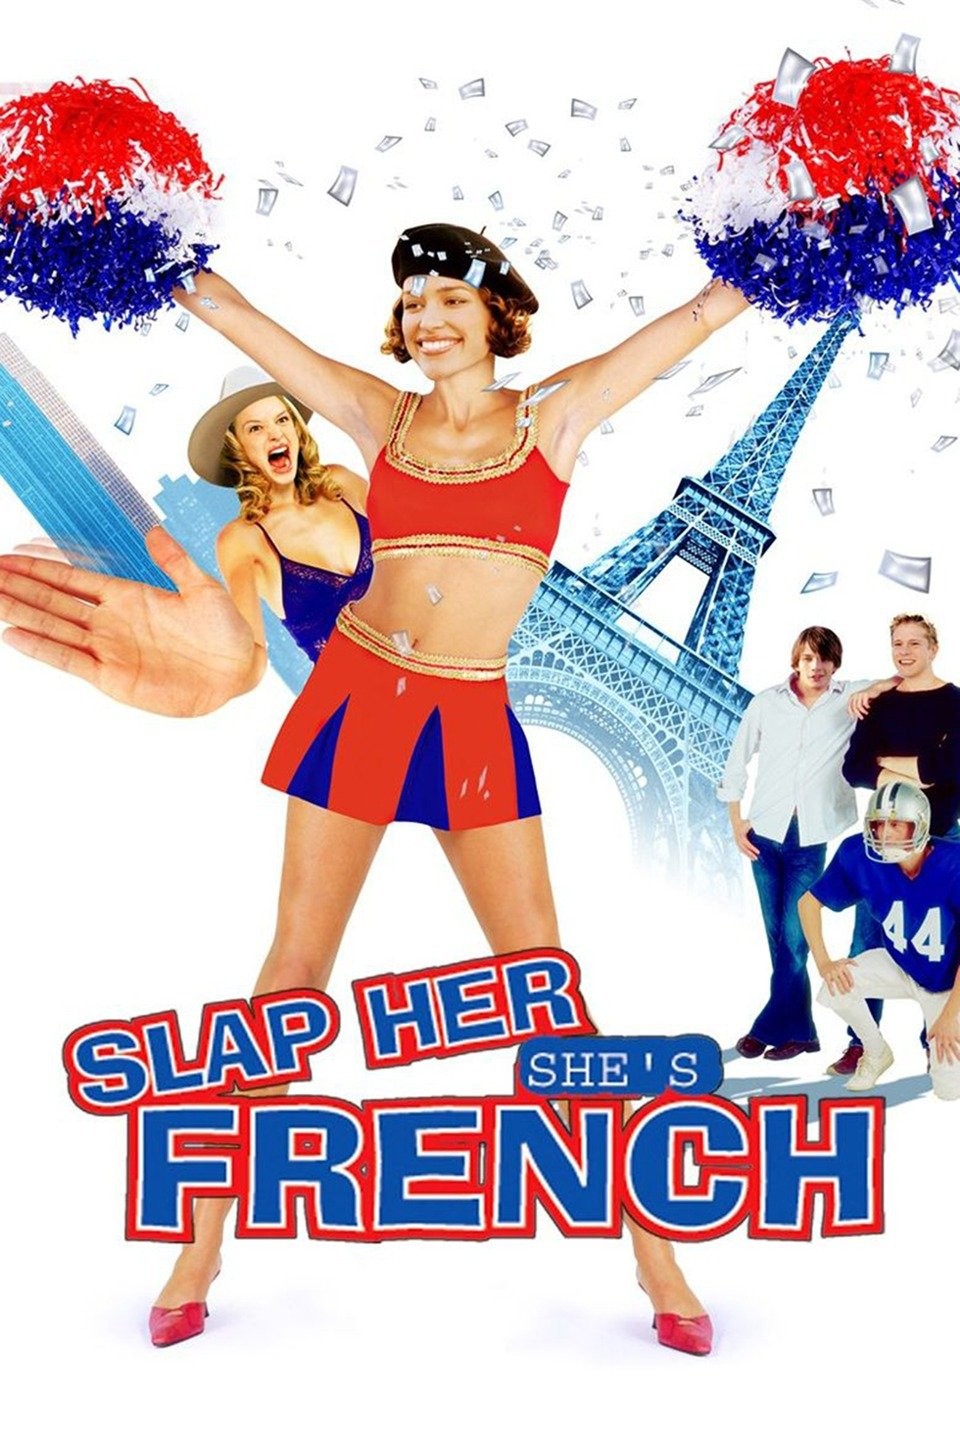 Slap Her She's French DVD 2001 Culture-Clash Comedy Movie w/ Piper Perabo